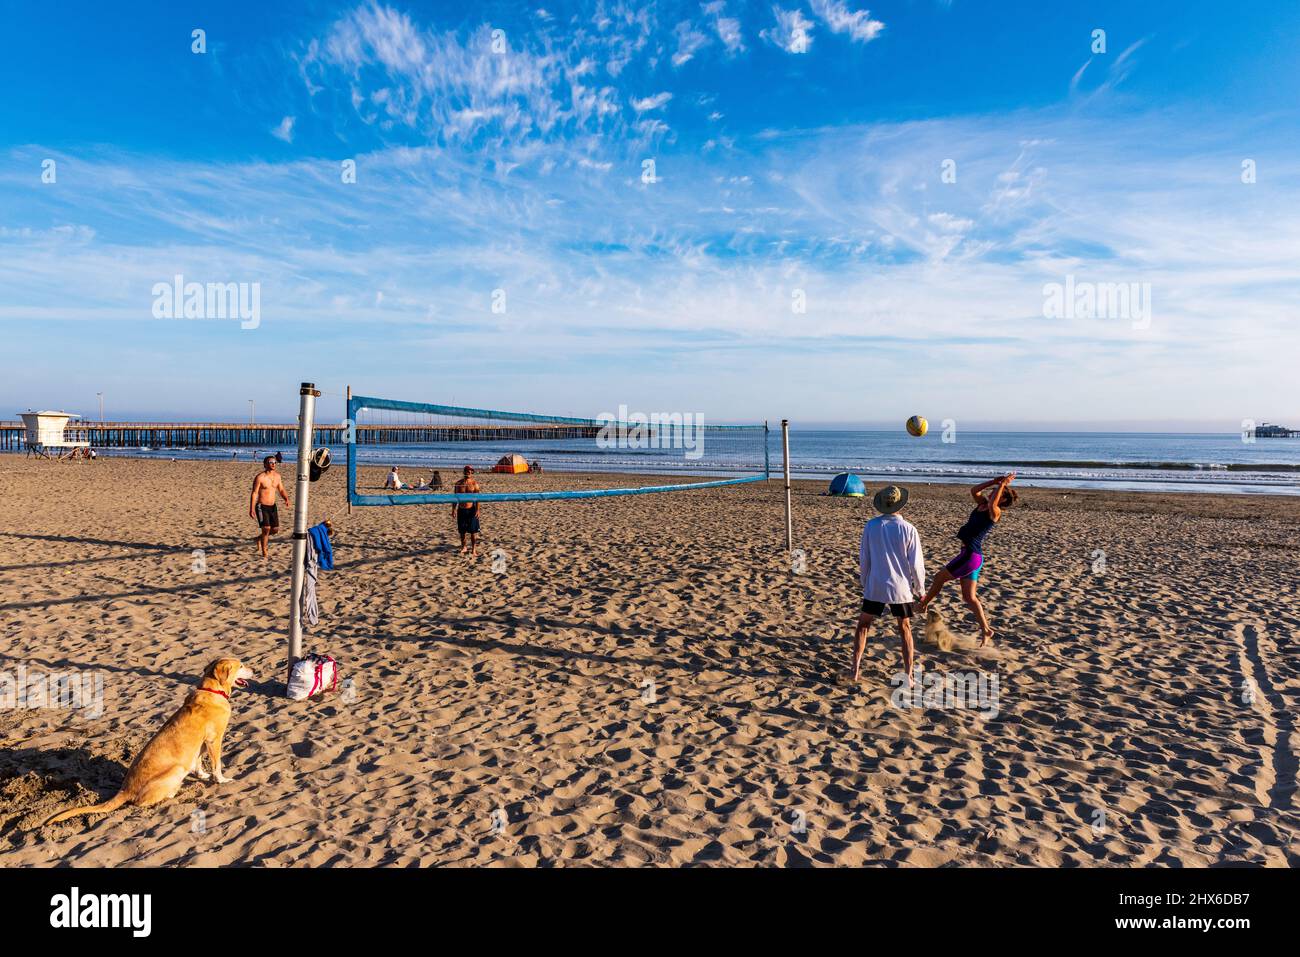 Avila Beach, CA / 3. April 2016: Hund beobachtet Beachvolleyball-Spiel auf dem Sand. Stockfoto